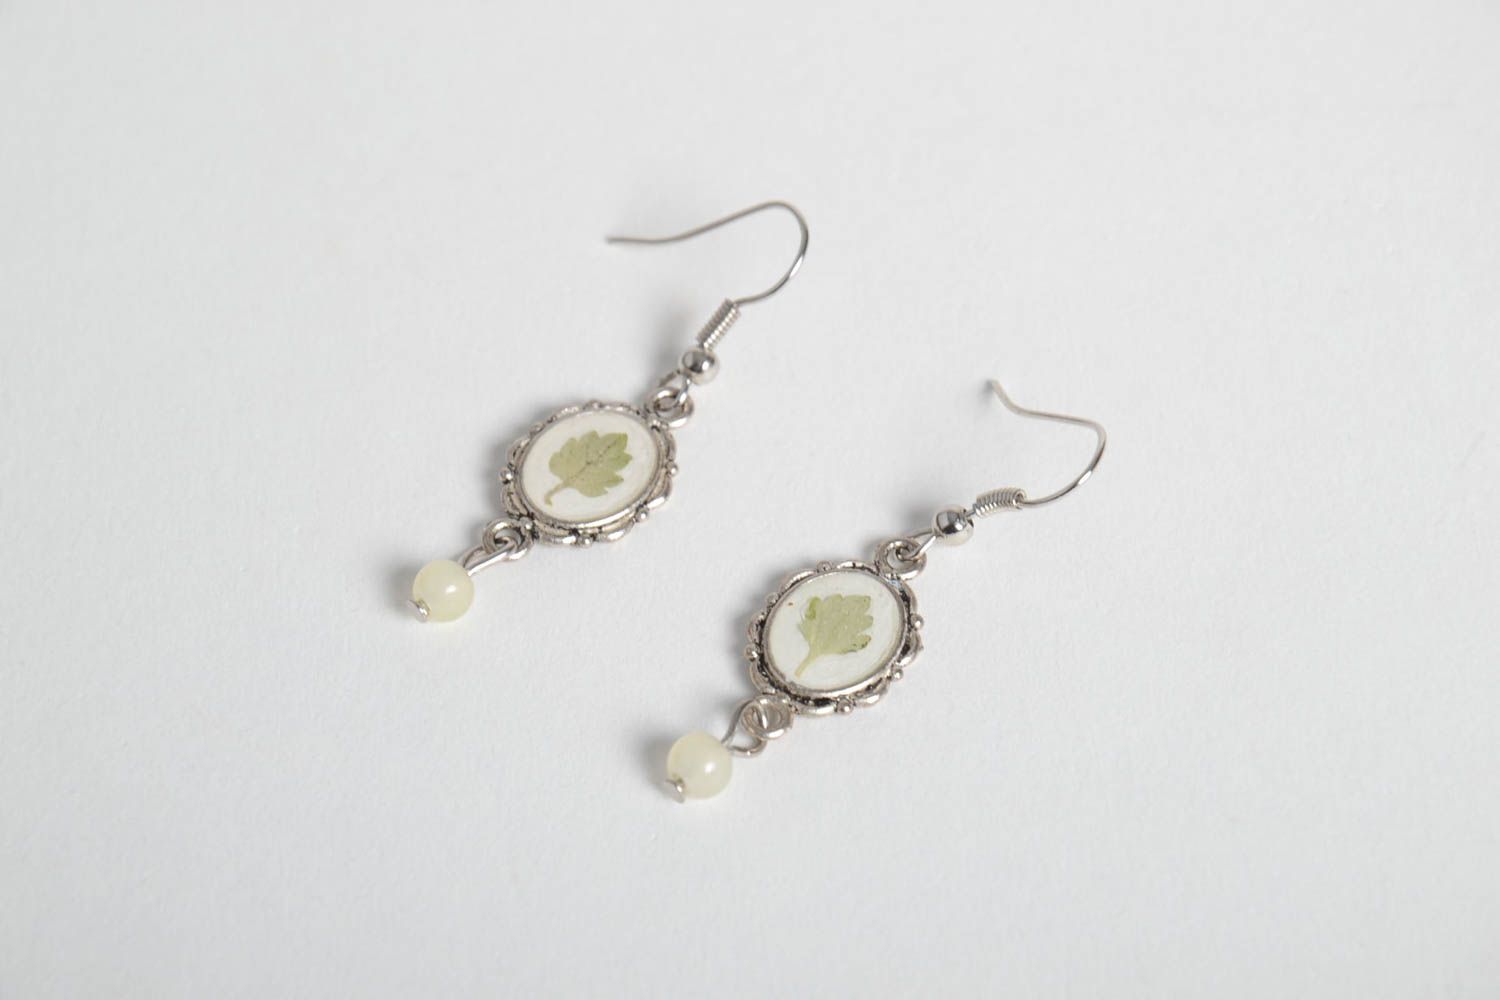 Handmade vintage jewelry unusual earrings with charms designer earrings photo 2